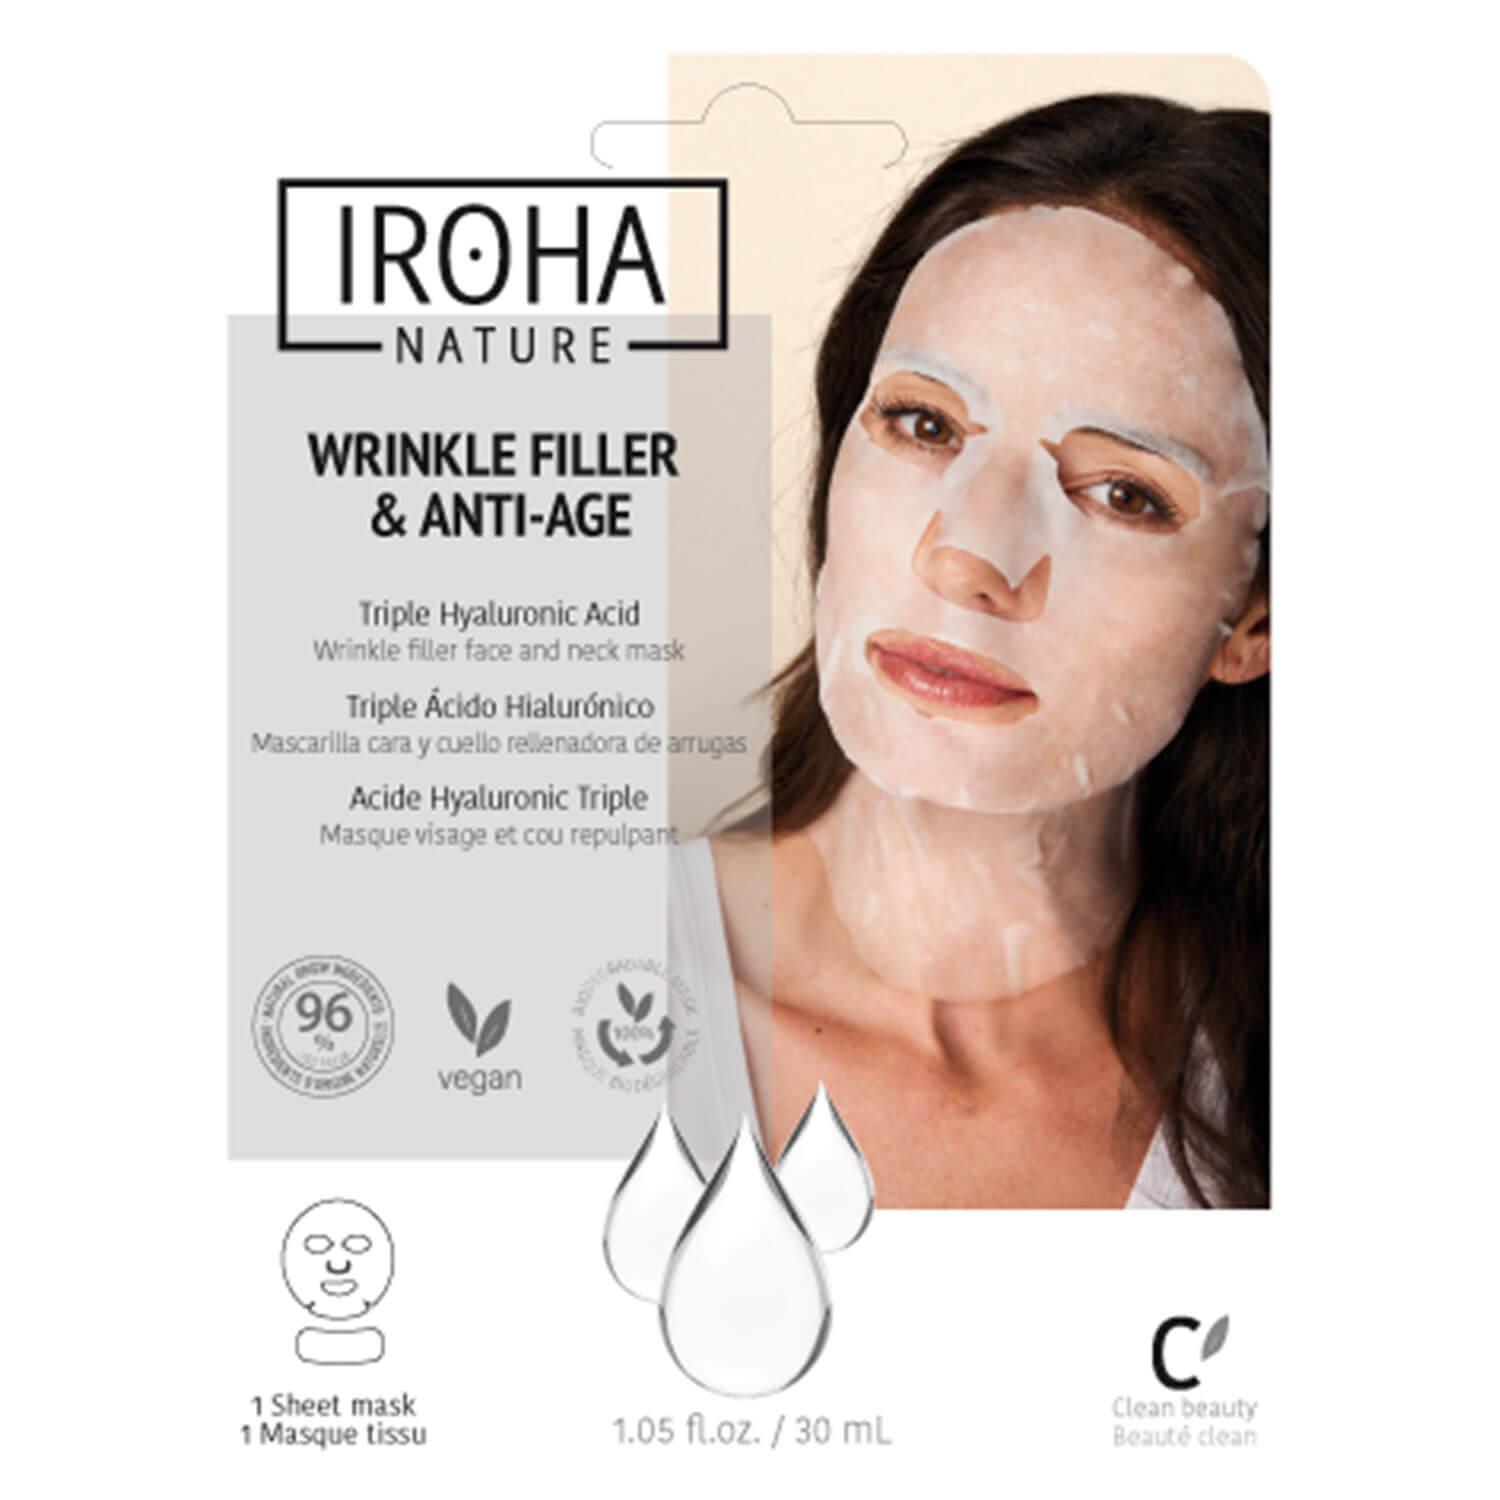 Iroha Nature - Wrinkle Filler & Anti-Age Triple Hyaluronic Acid Face & Neck Mask